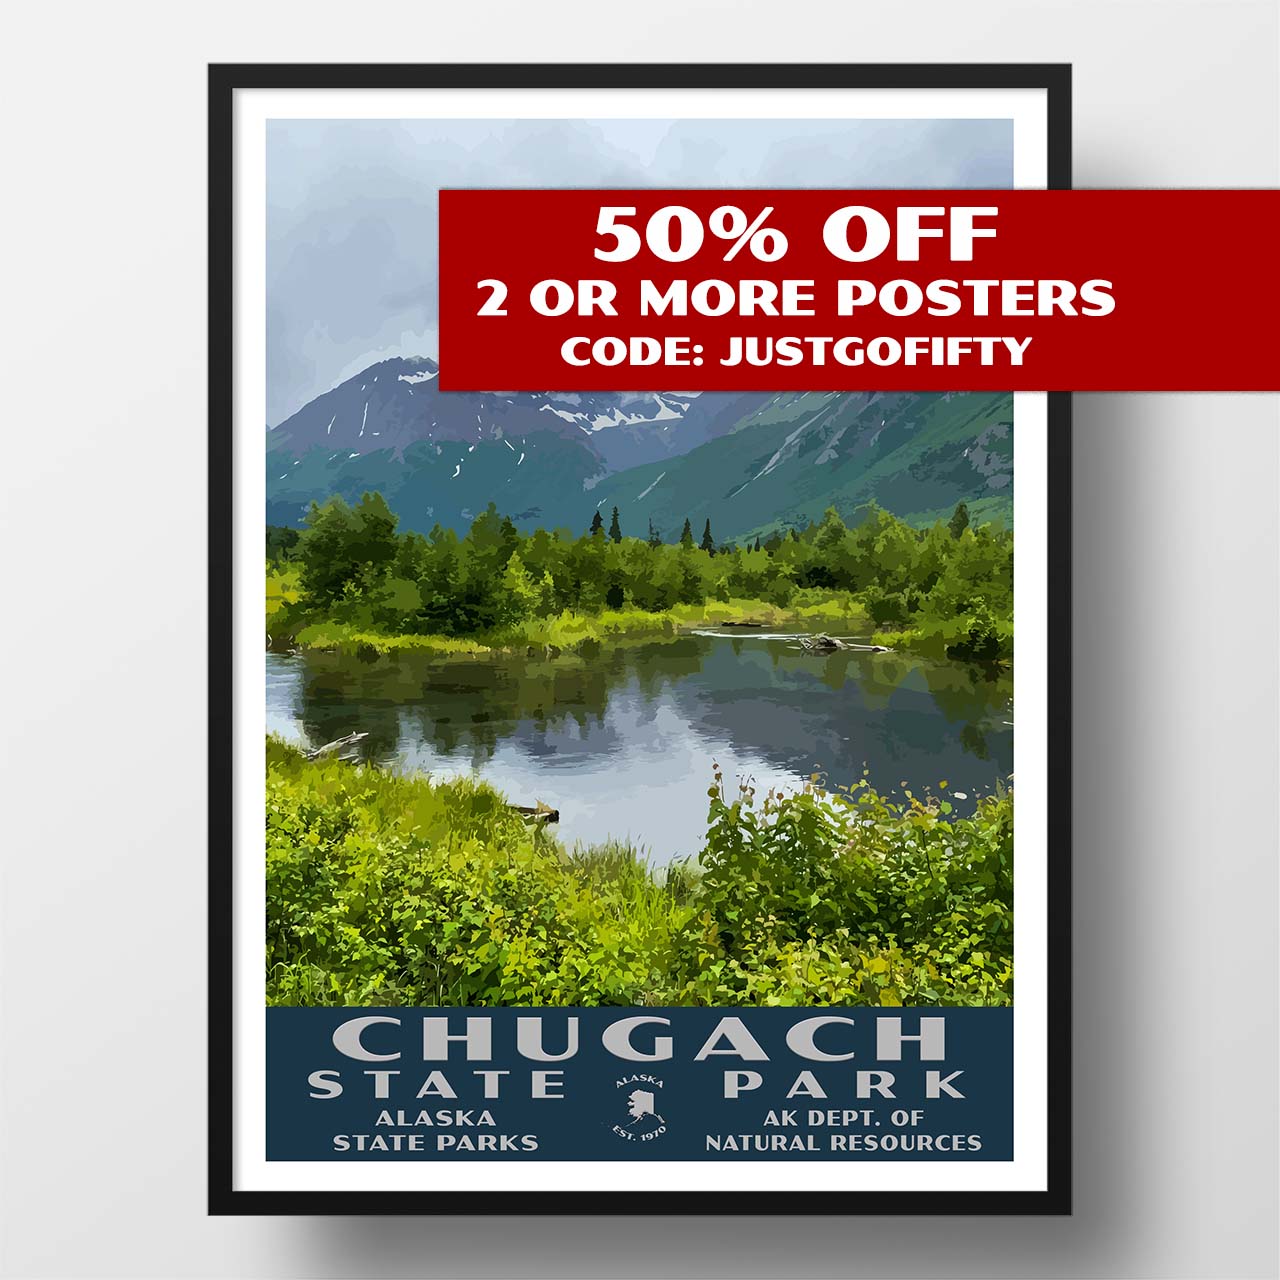 Chugach State Park poster